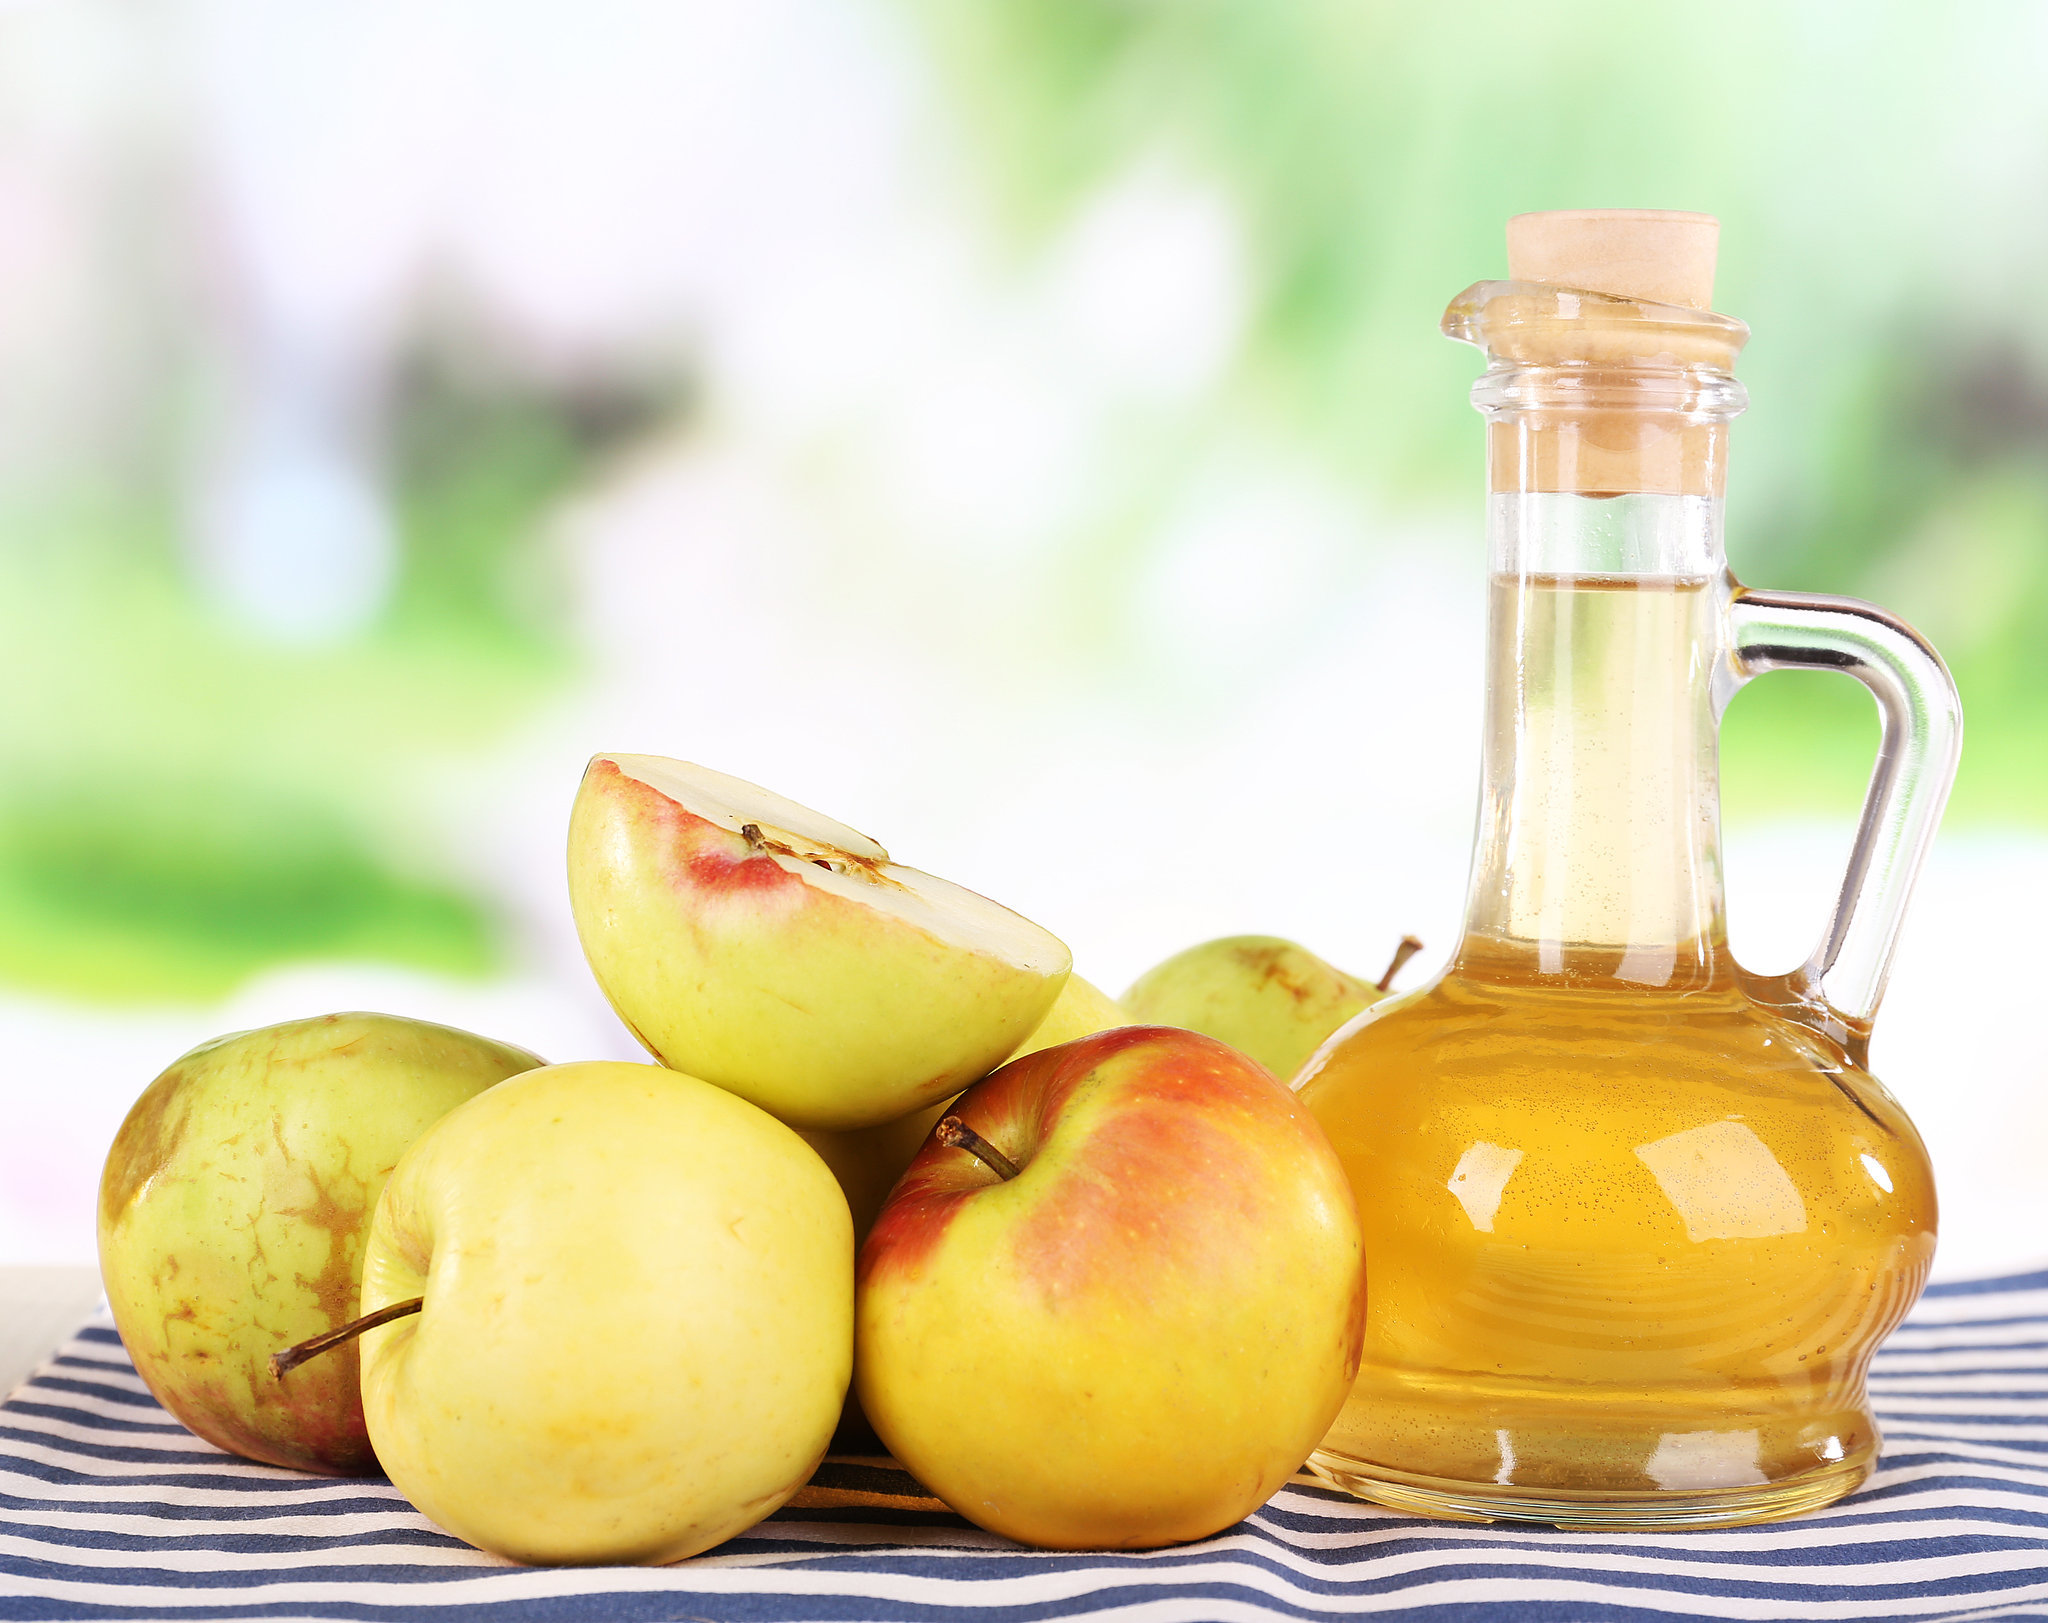 Apple cider vinegar 2 - 6 داروی آنفولانزای خانگی با طعم های متفاوت